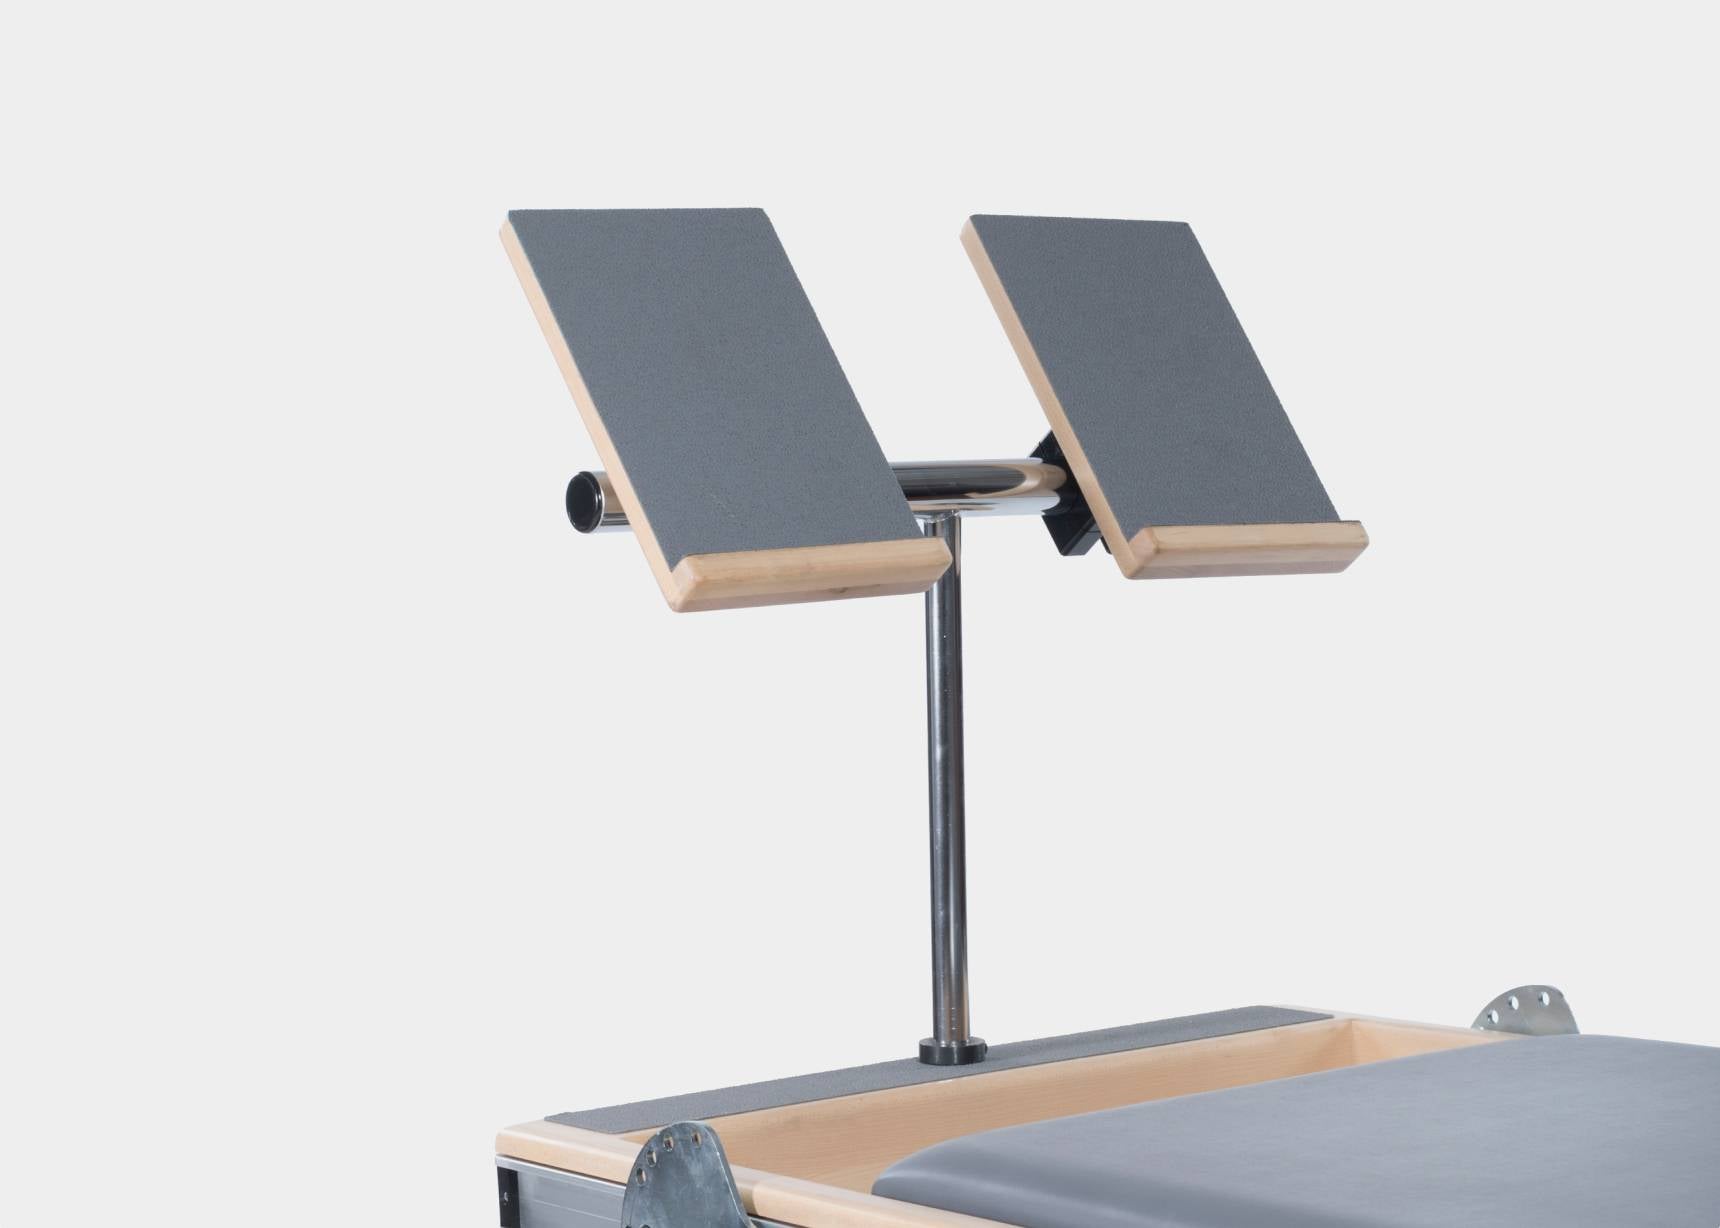 Studio Reformer Konnector - Balanced Body Pilates Reformer